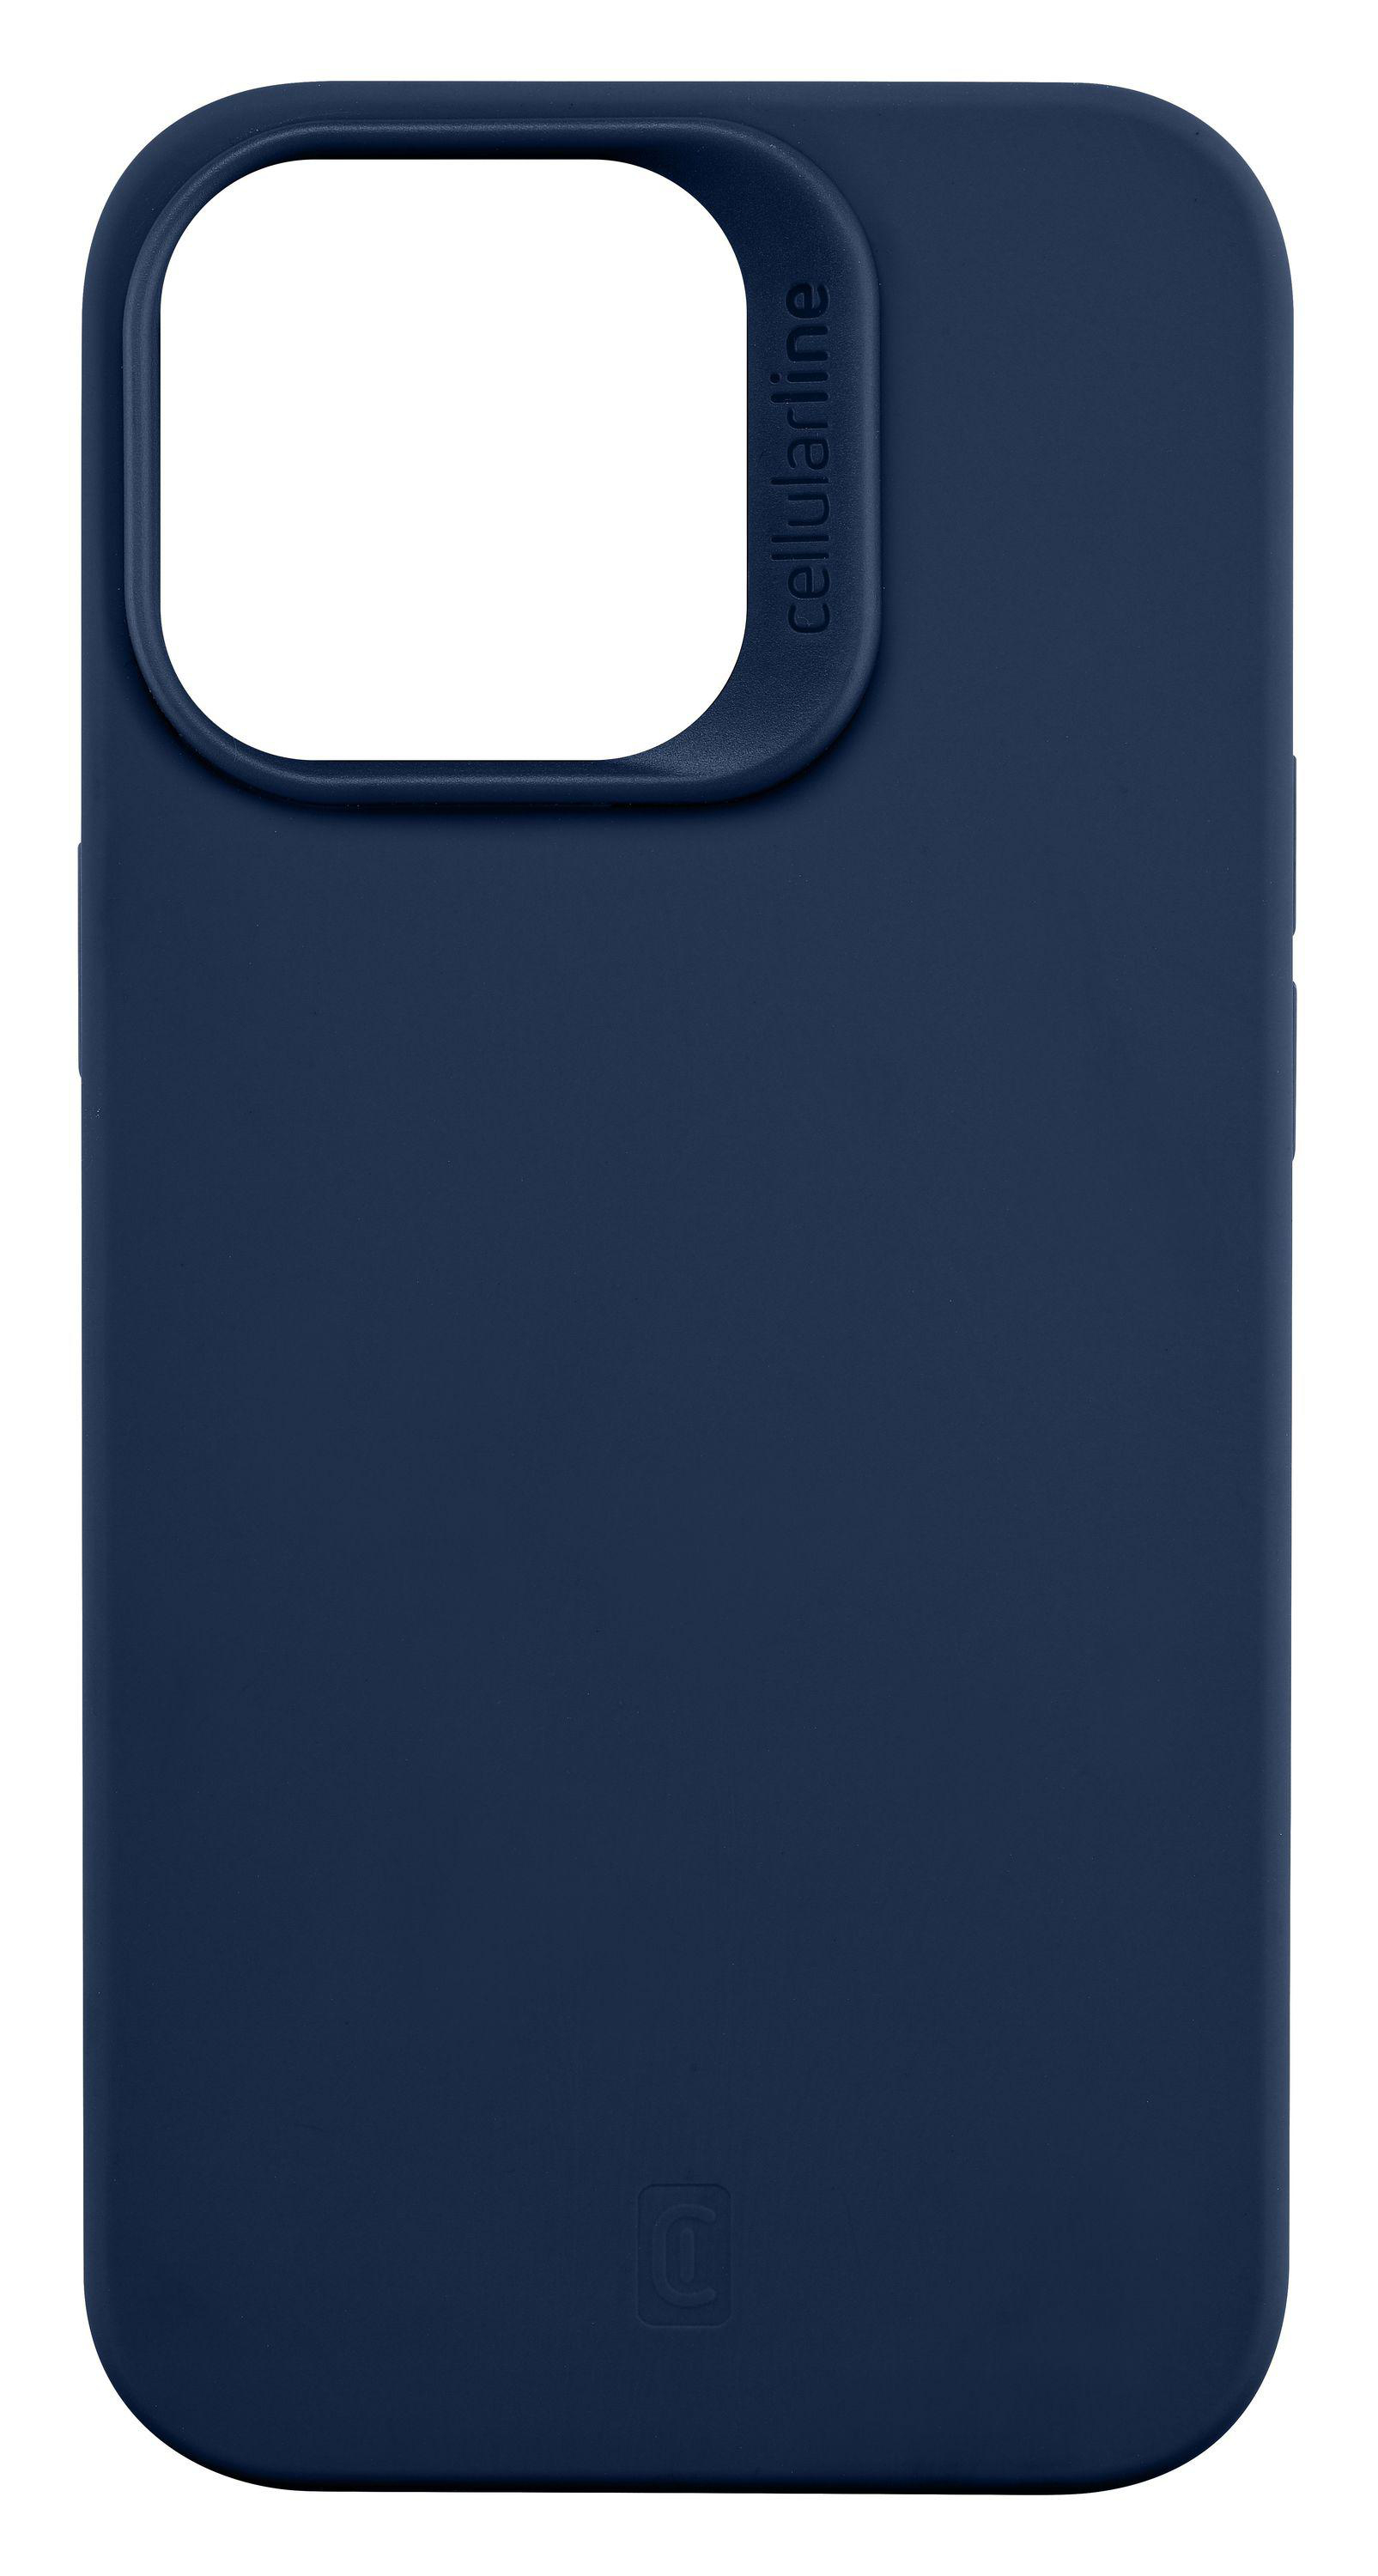 iPhone MAX, 14 PRO CELLULAR Apple, Backcover, LINE Sensation, Blue